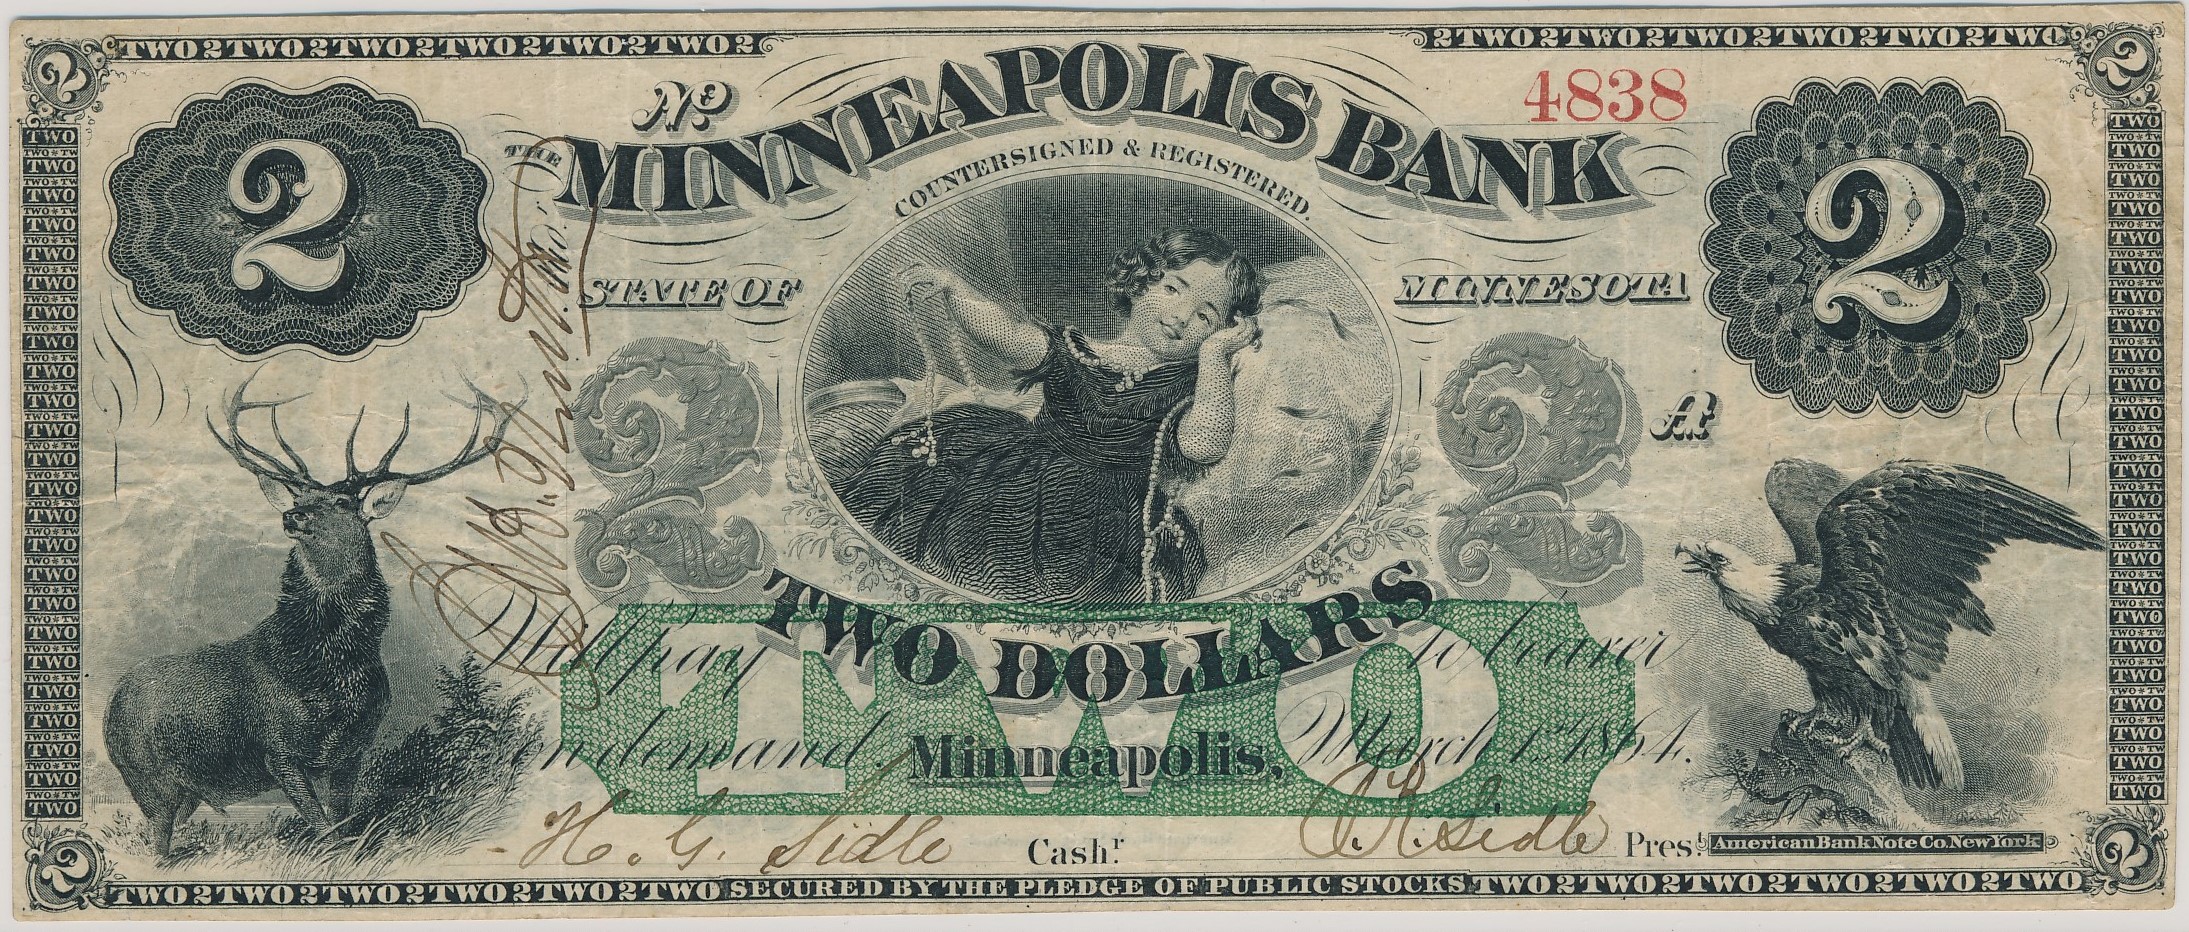 $2 Minneapolis Bank